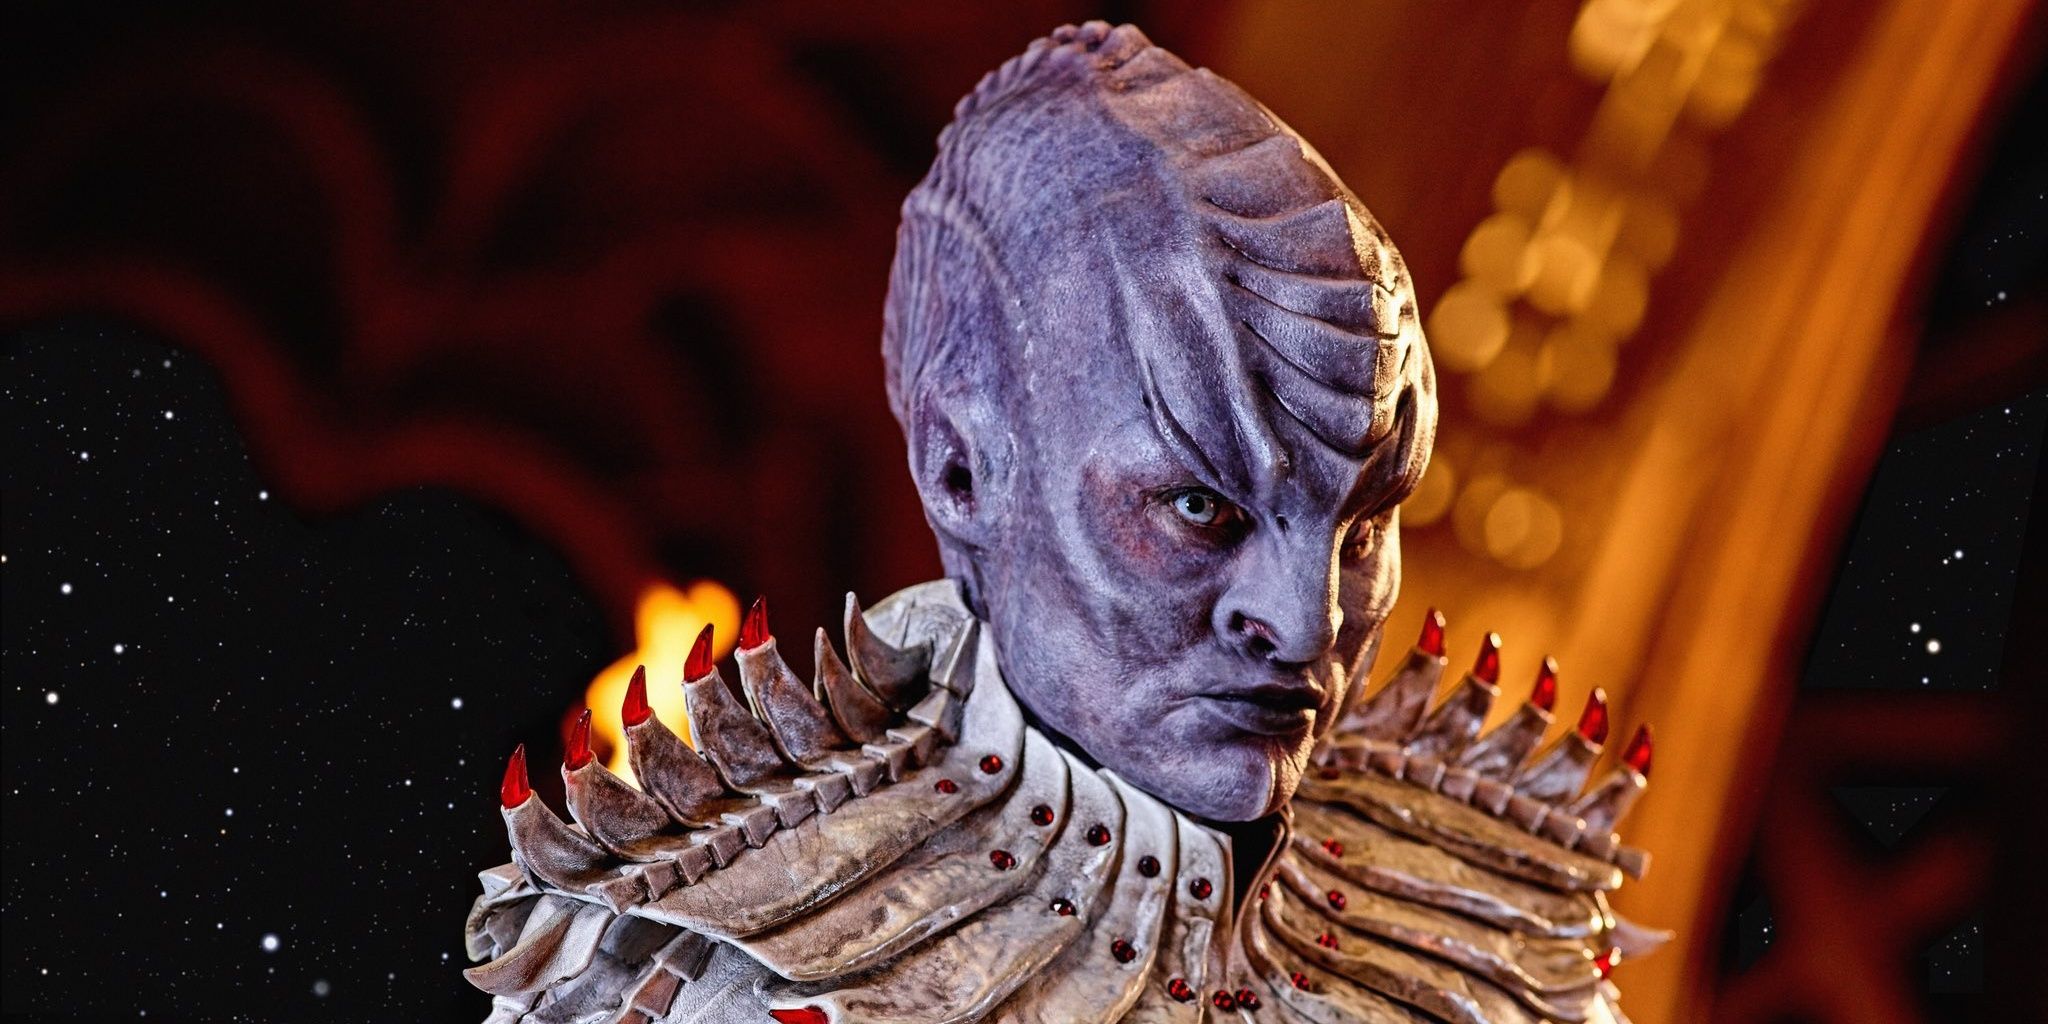 L'Rell Chancellor of the Klingon Empire